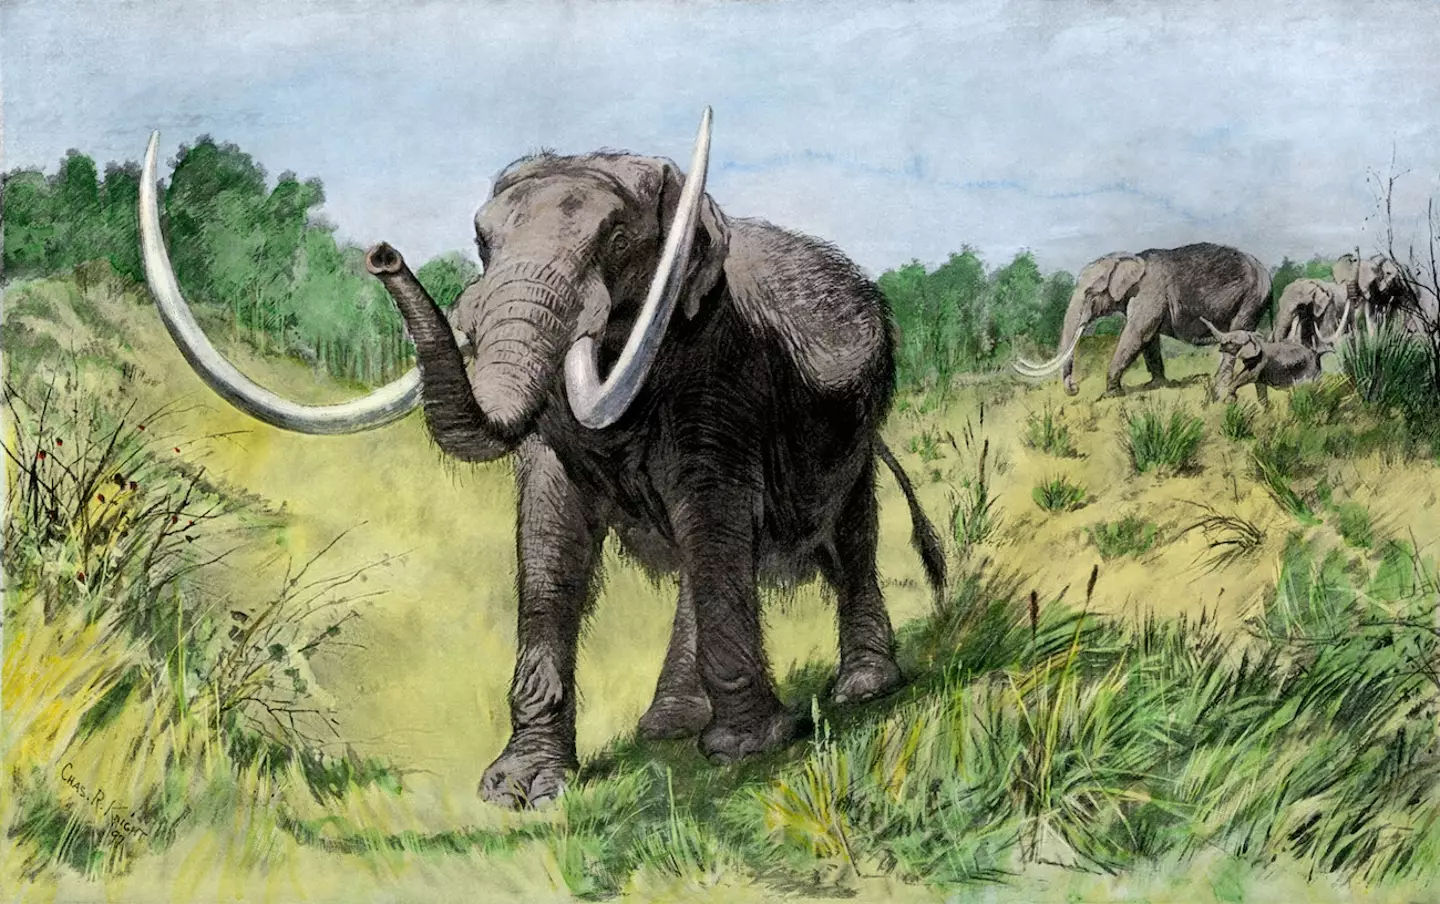 The ice age mammal - Mastodon - roamed as far as Greenland before becoming extinct.